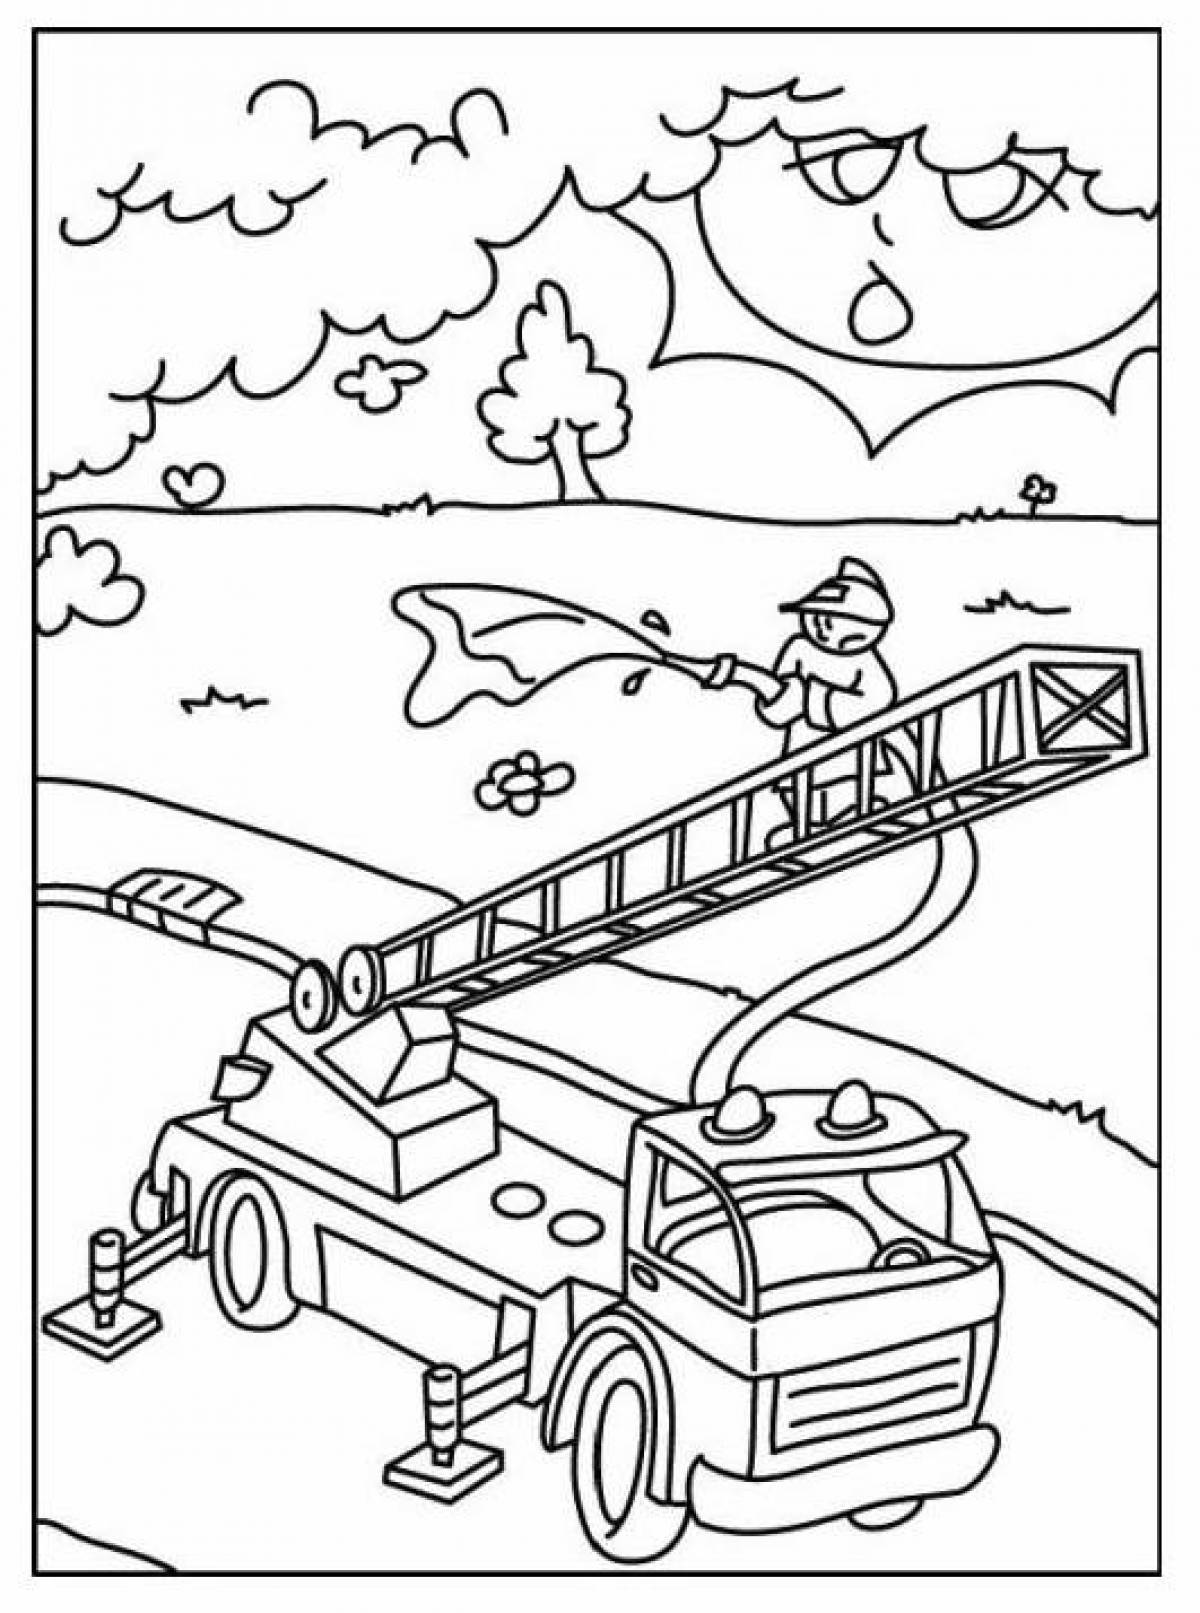 Firemen drawing